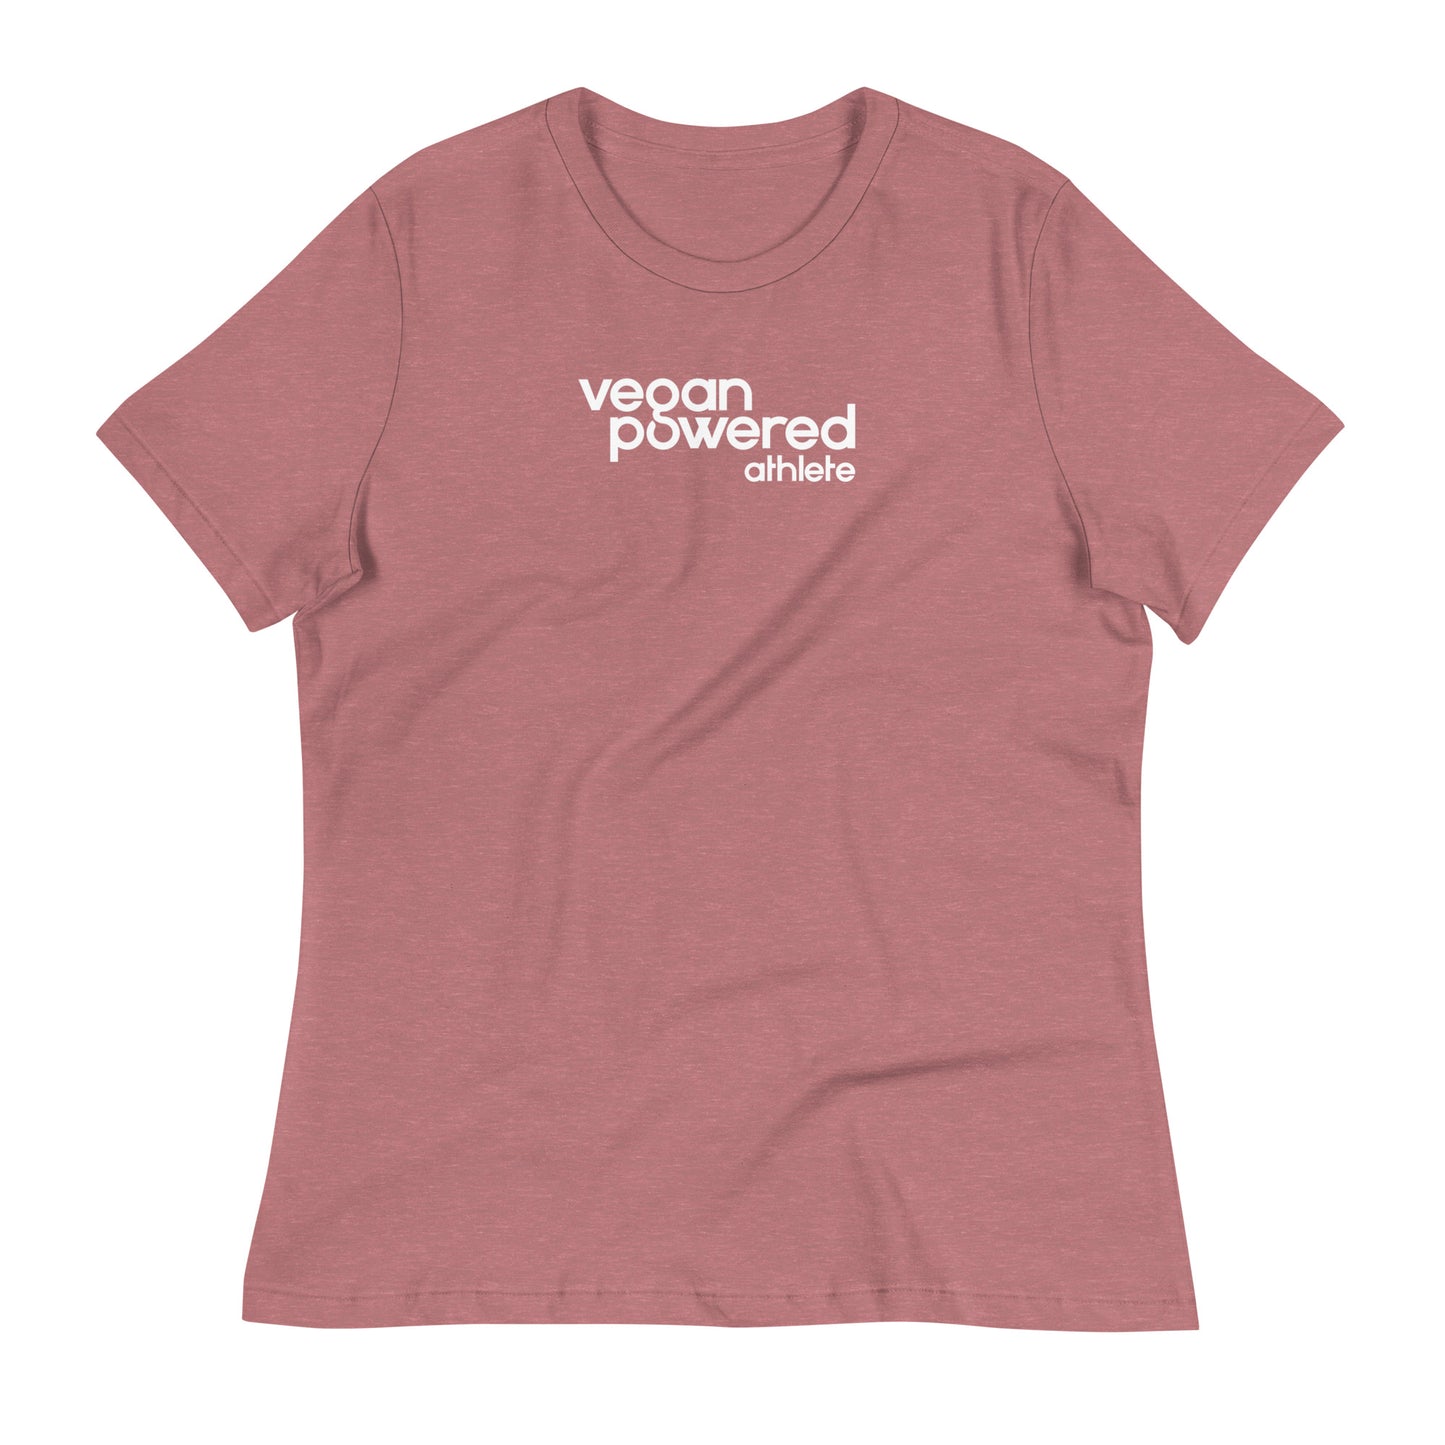 vegan powered athlete Women's Relaxed T-Shirt